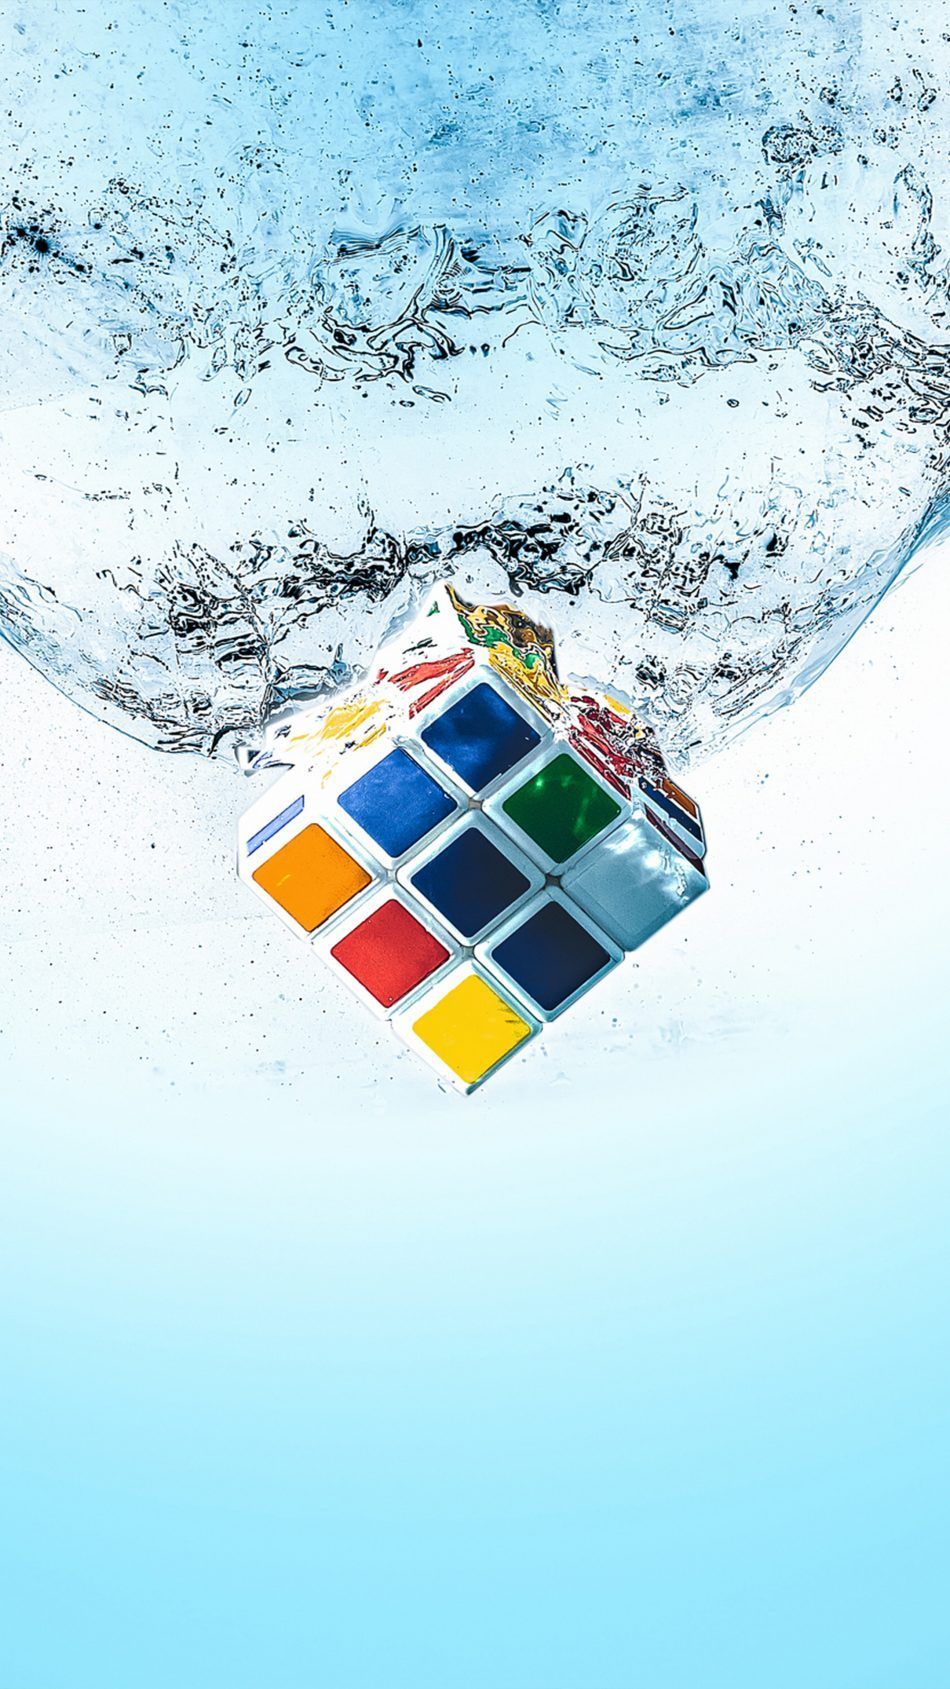 Rubik's Cube Splash Water 4K Ultra HD Mobile Wallpaper. Android wallpaper, Rubiks cube, iPhone wallpaper